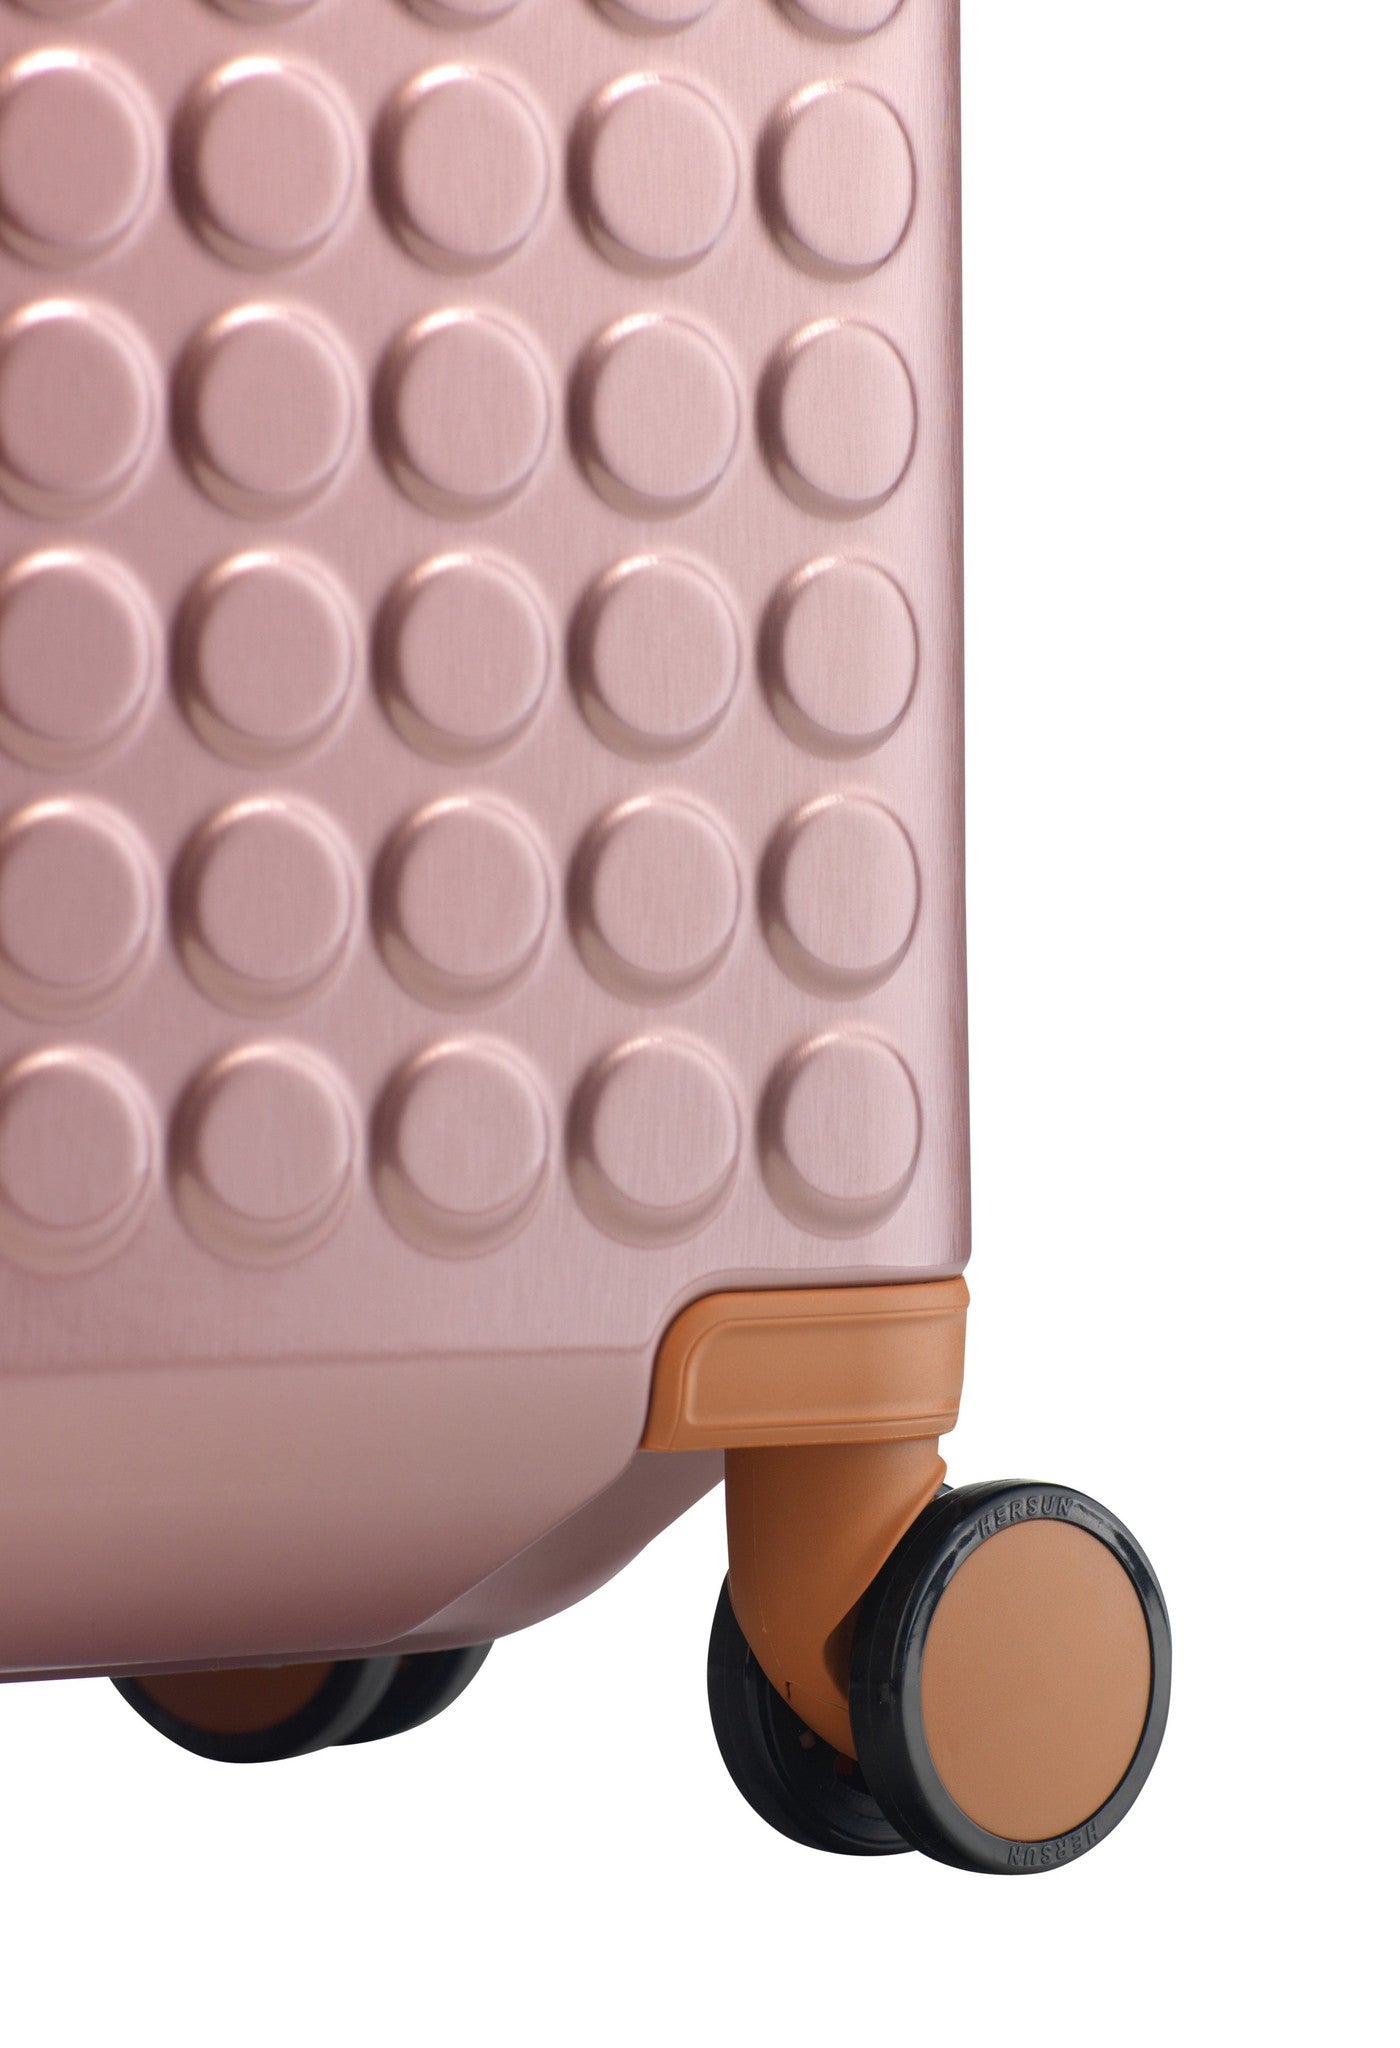 Hardside 4-wheels suitcase Pink (30") 16126PC